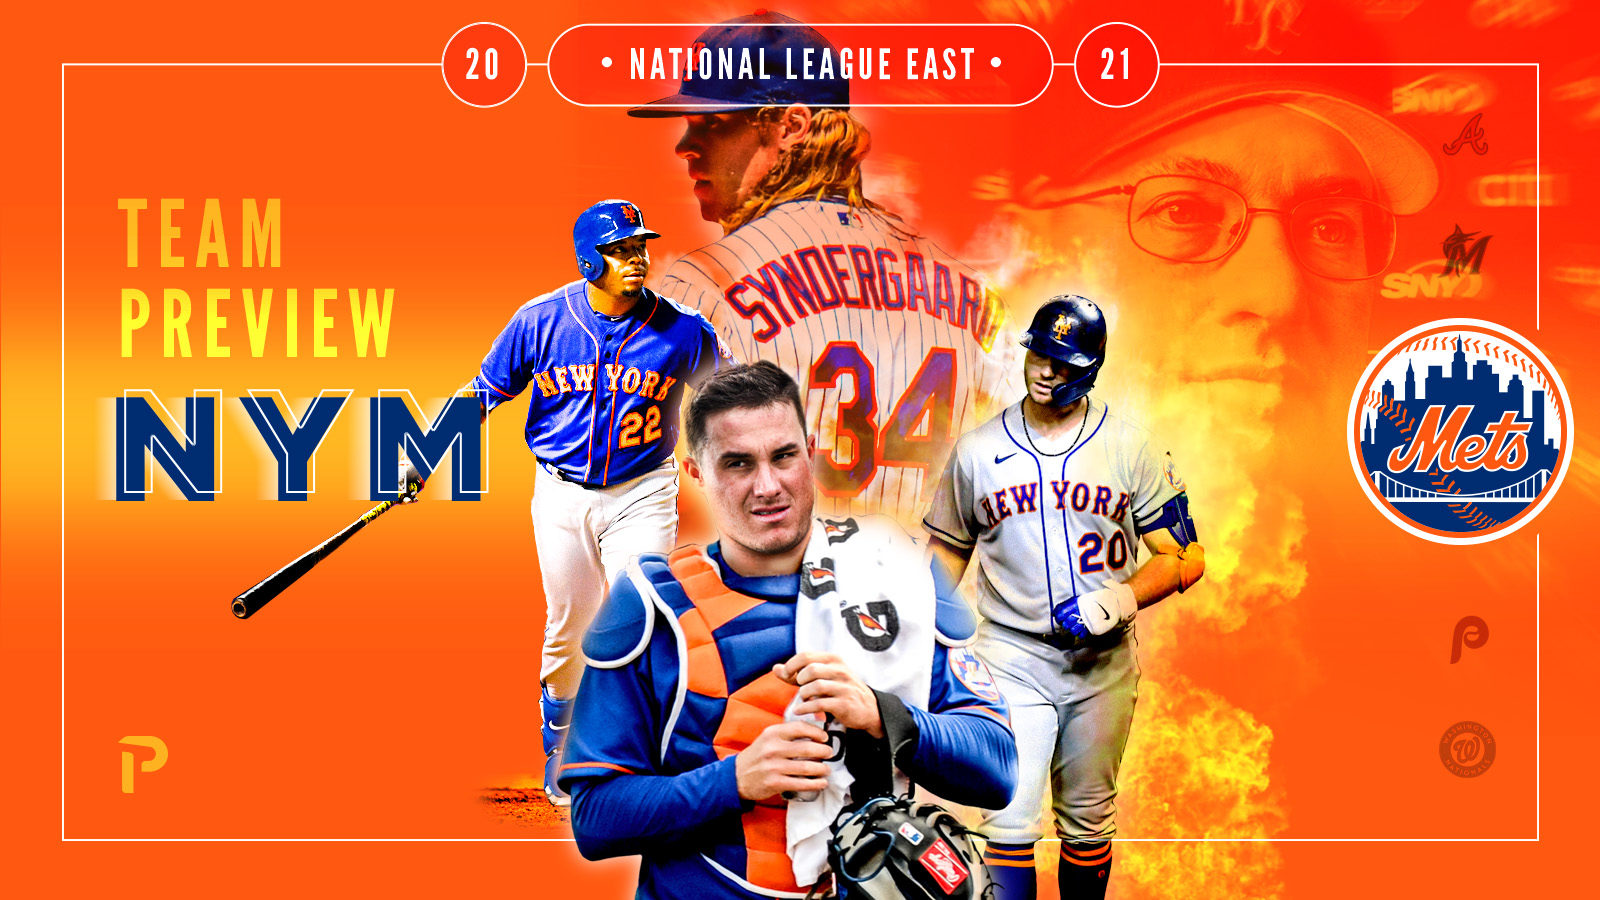 NEW Mets Blue Orange JERSEY SIZE Medium National League Dynasty